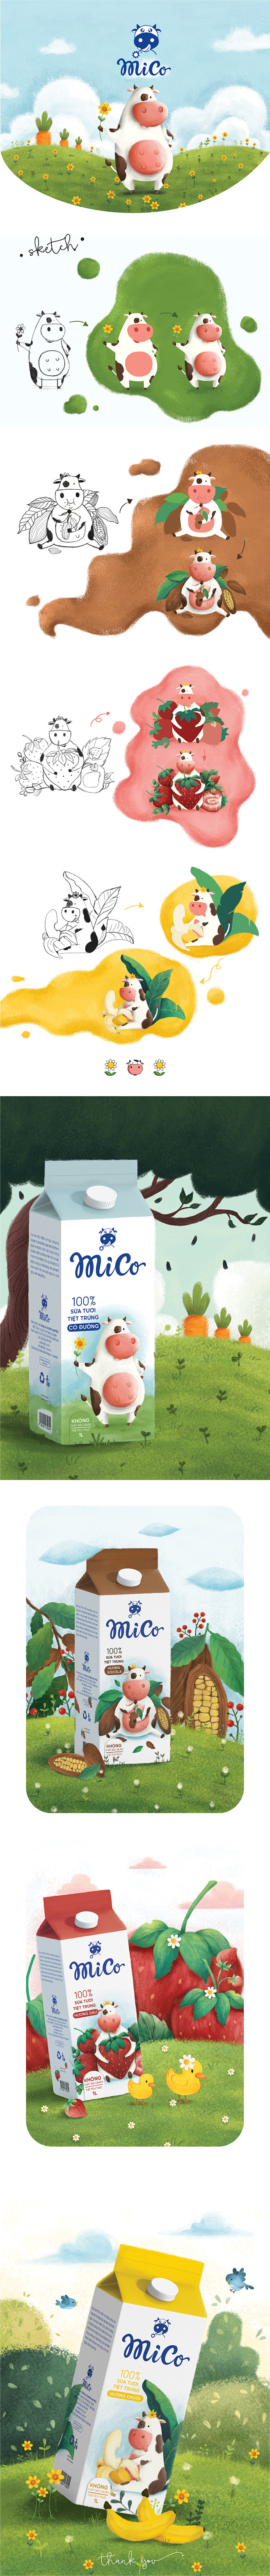 Dairy cows | Packagi...